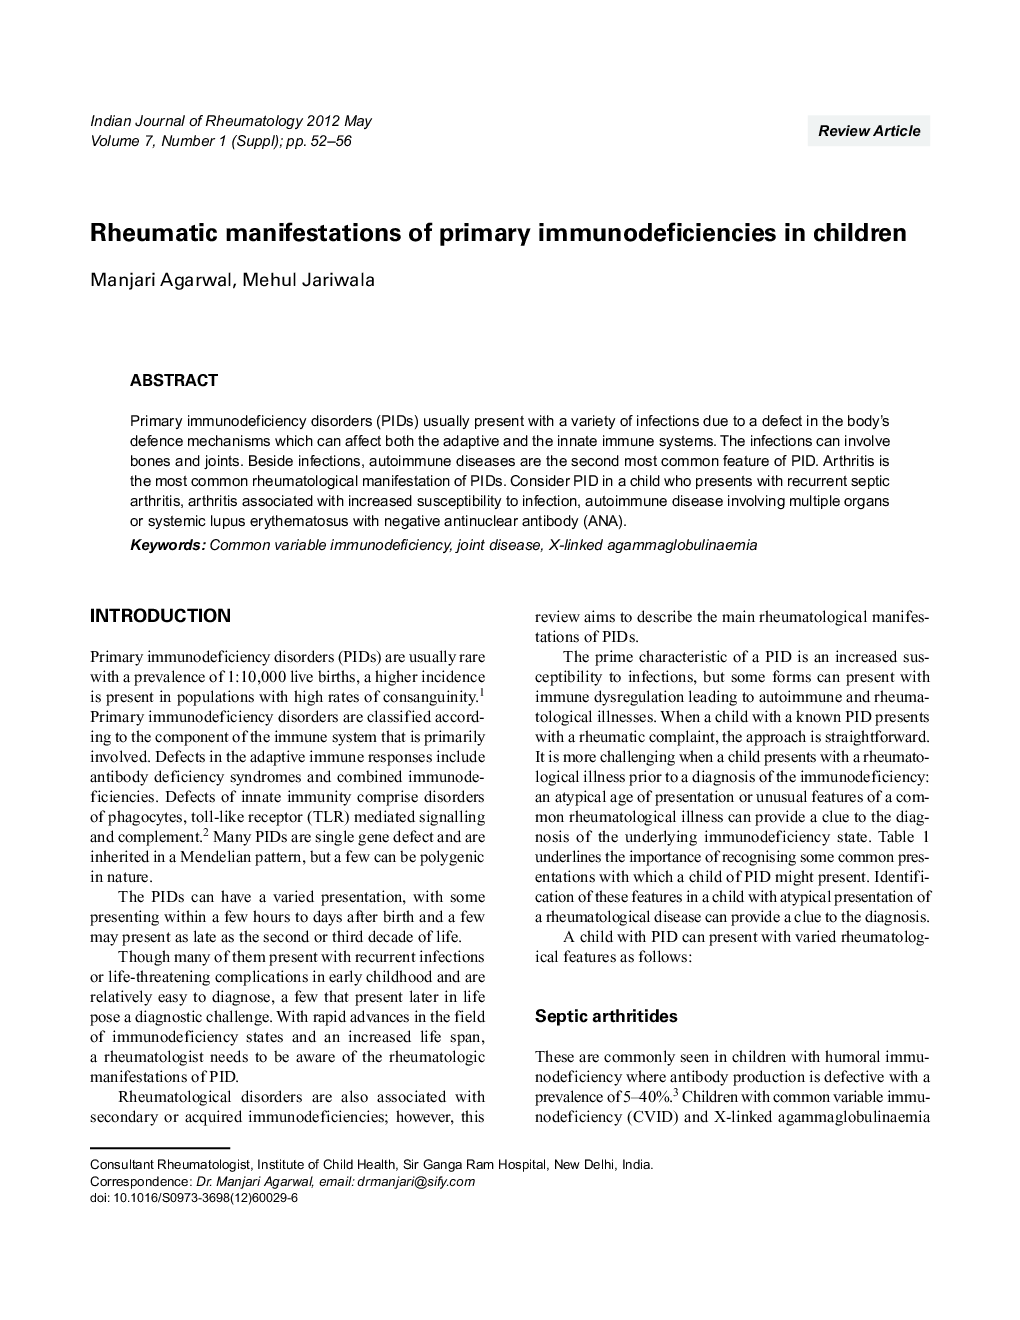 Rheumatic manifestations of primary immunodeficiencies in children